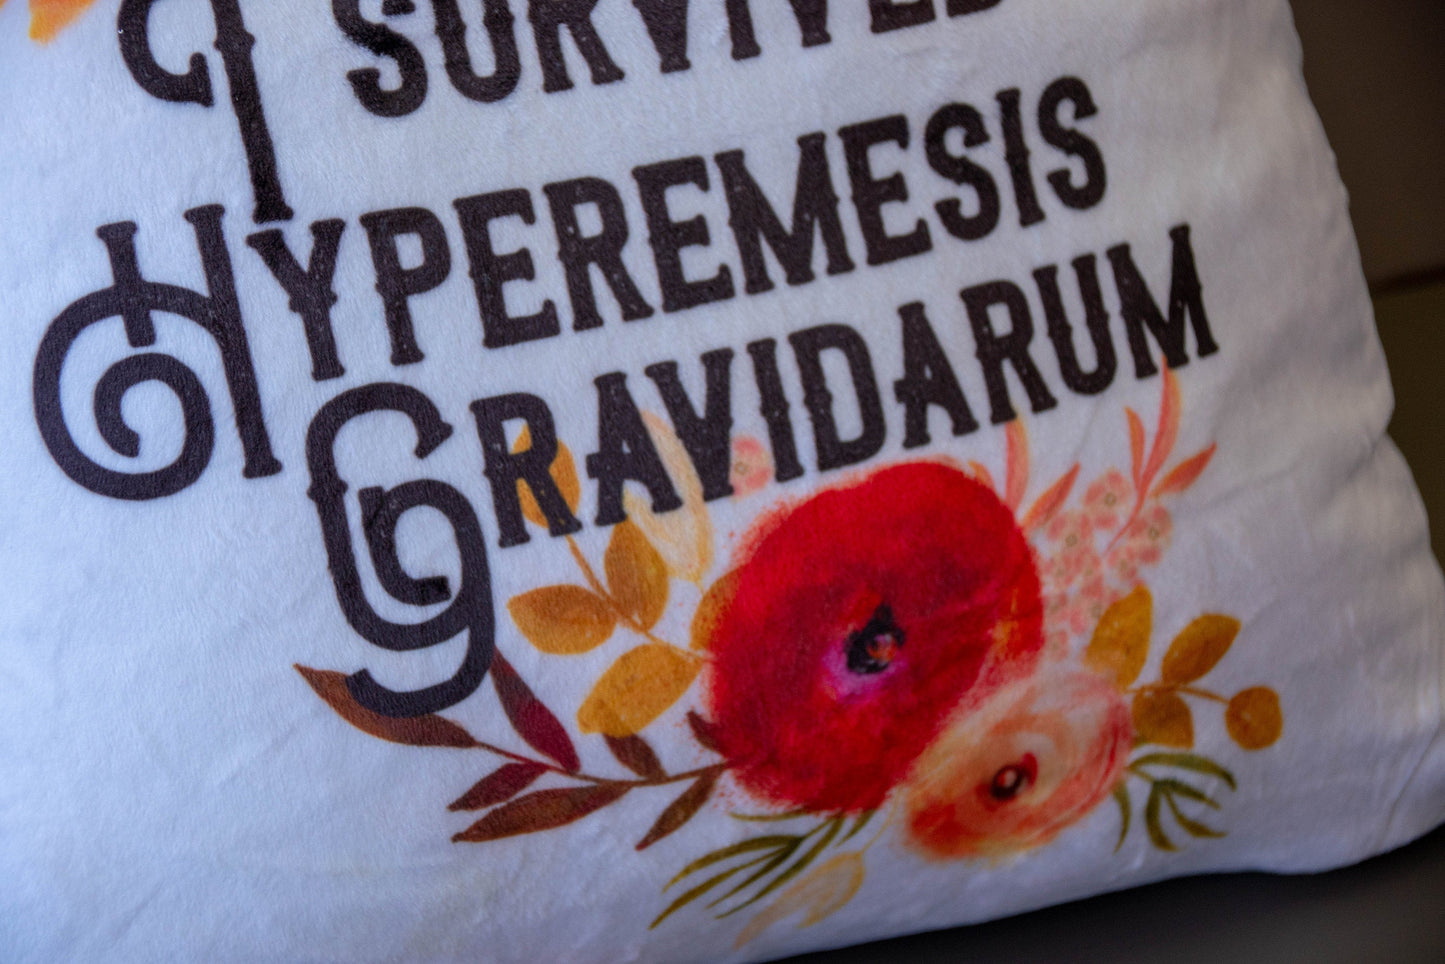 Home Decor Pillow - ToughGirl - ToughGuy - I survived Hyperemesis Gravidarum - Chronic Illness - I am a Survivor